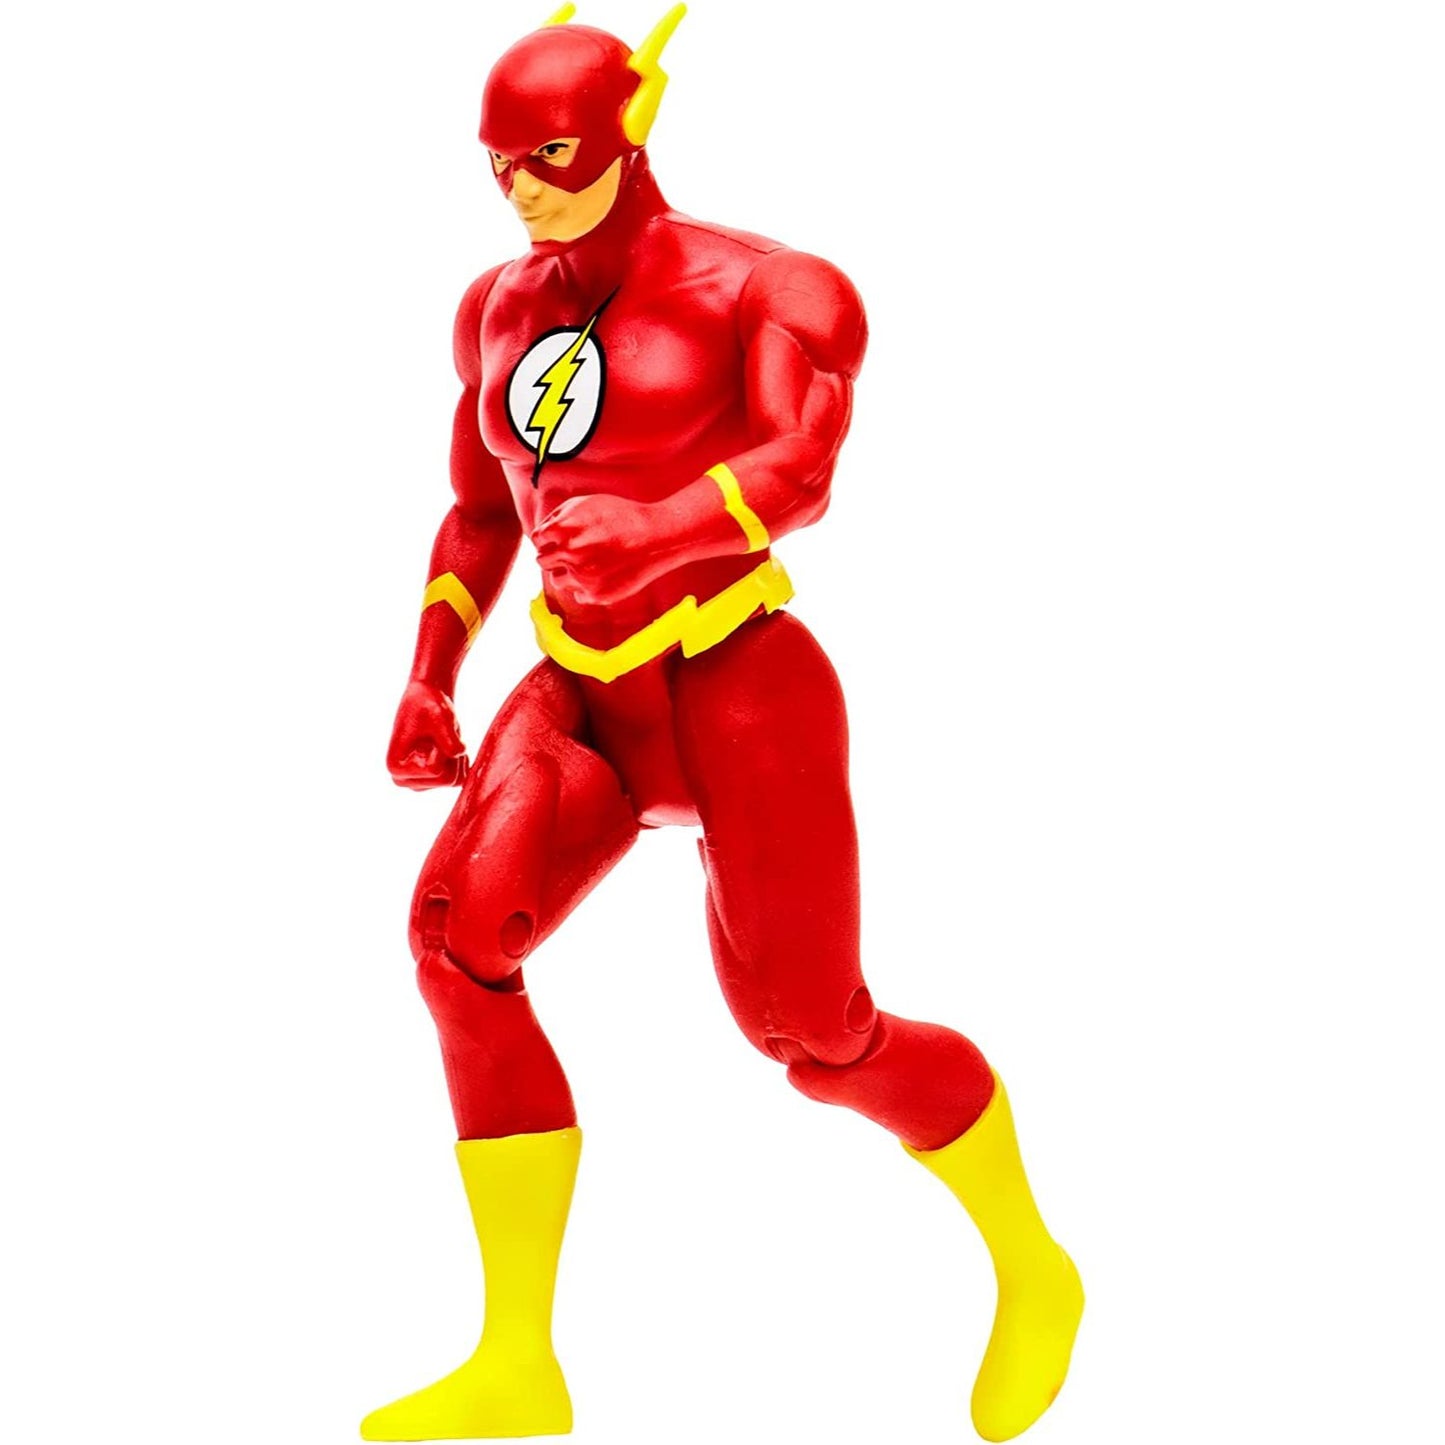 DC Direct - Super Powers - The Flash Figure